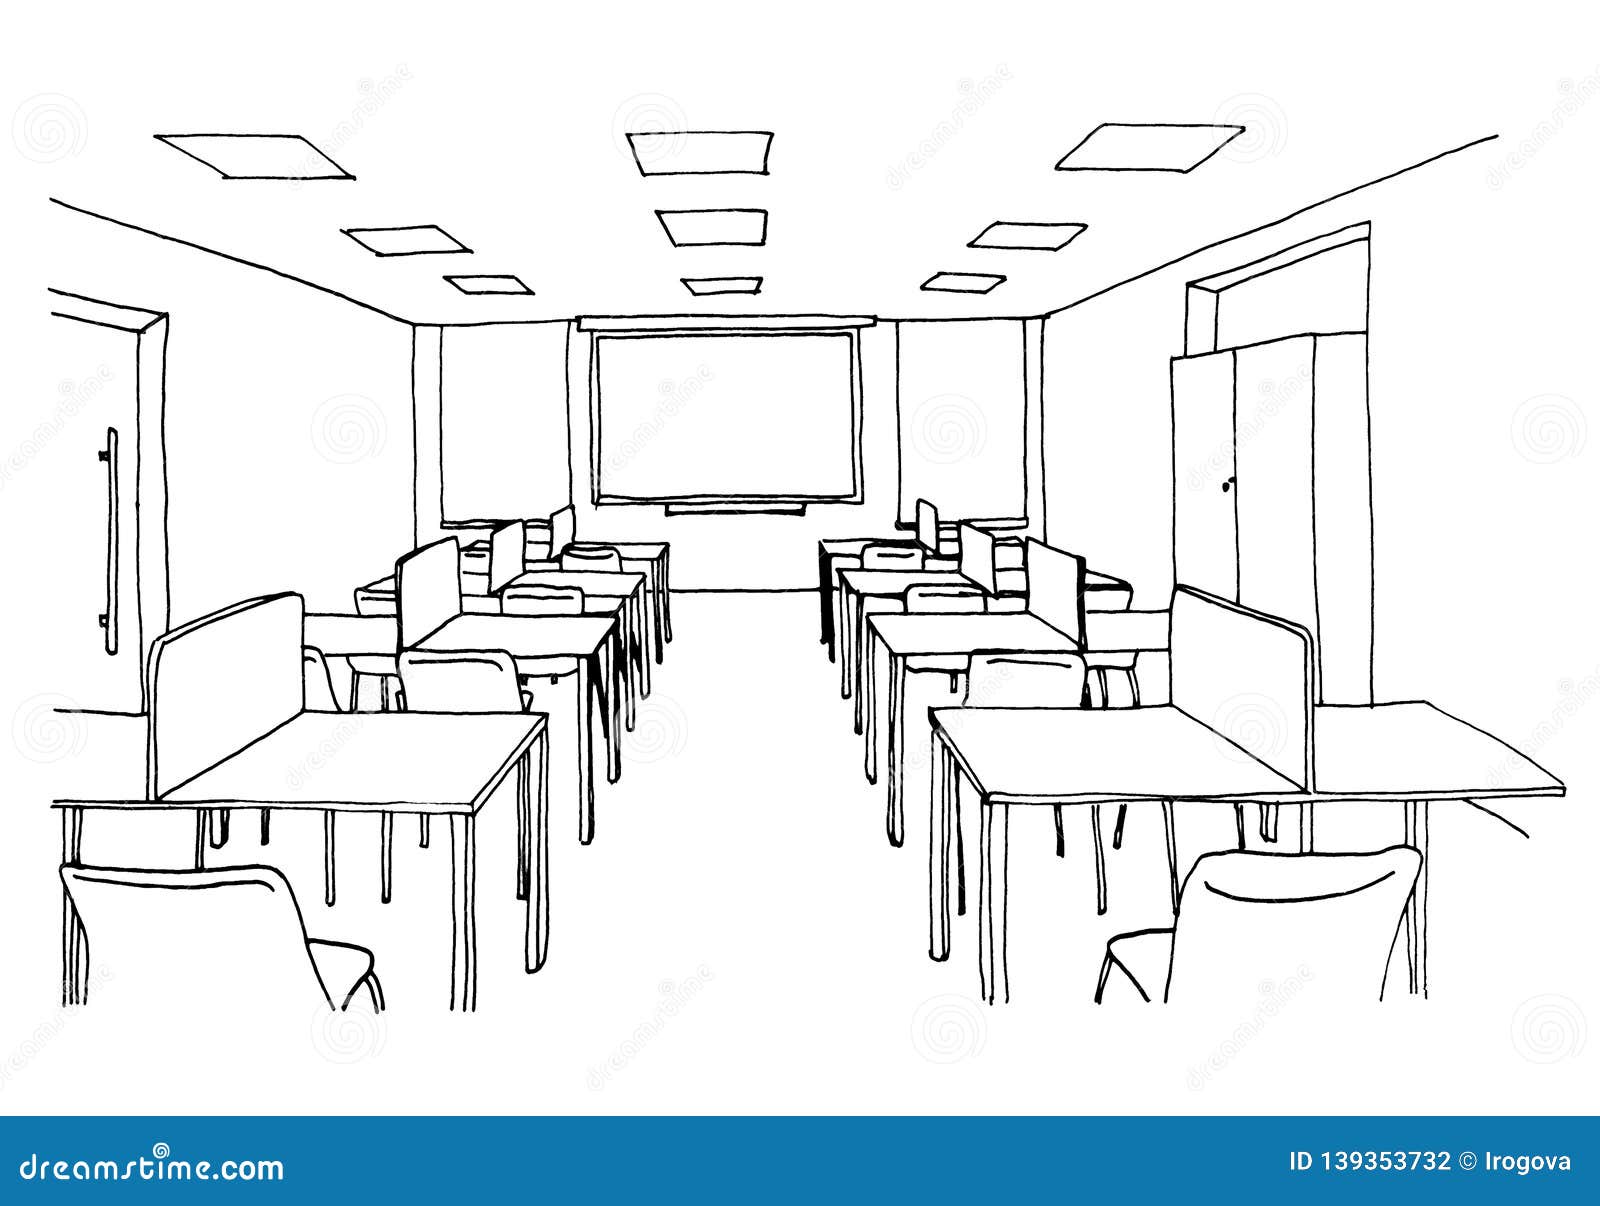 I drew a classroom : r/drawing